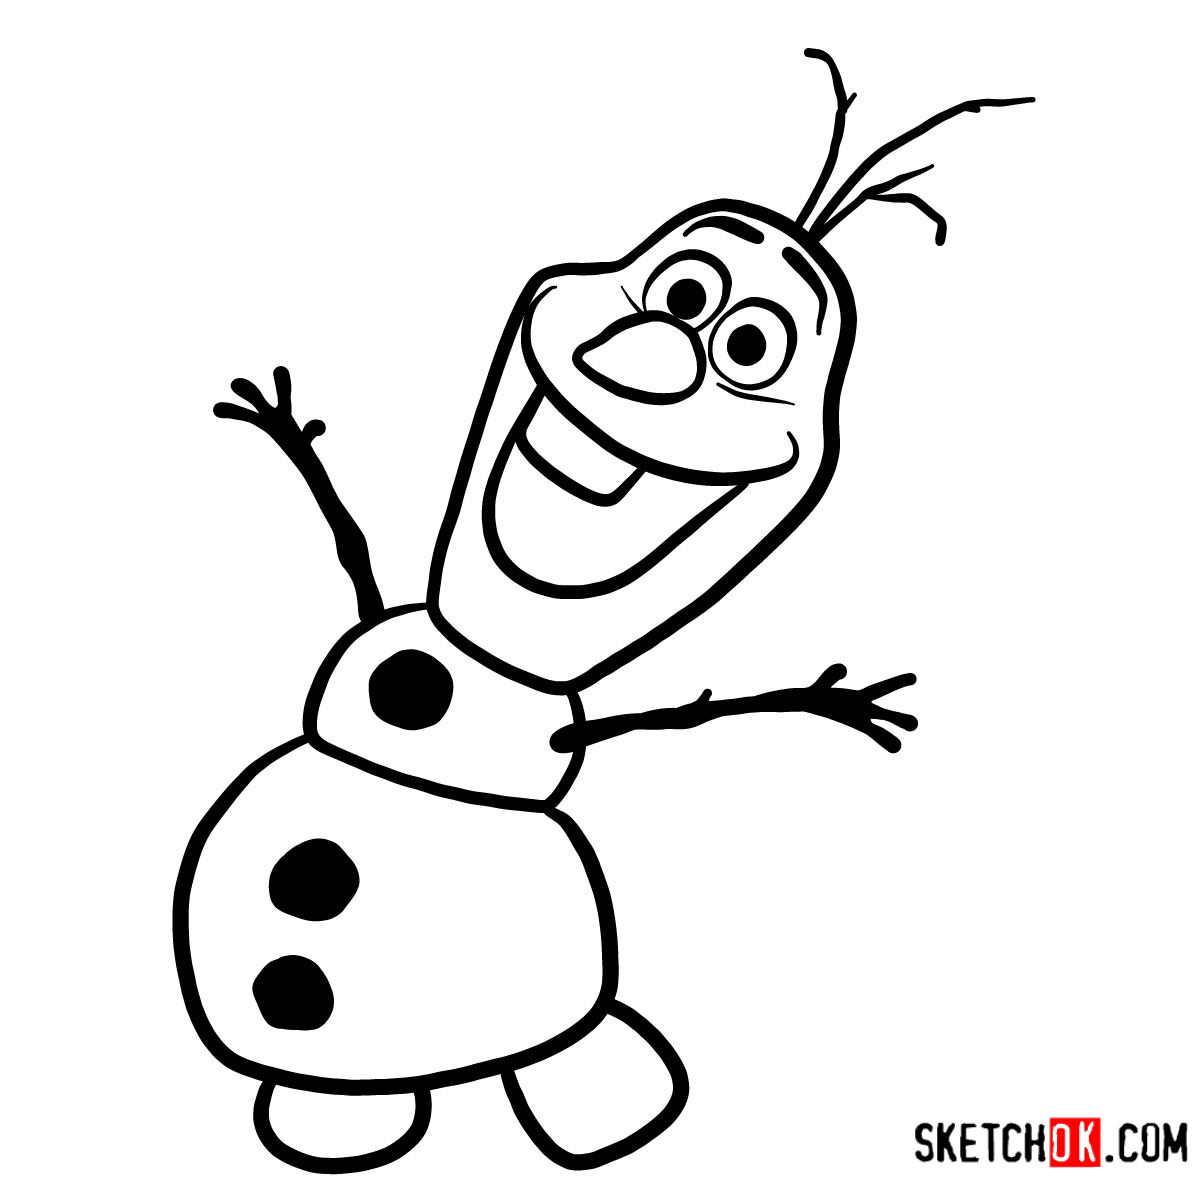 How to draw happy Olaf | Frozen